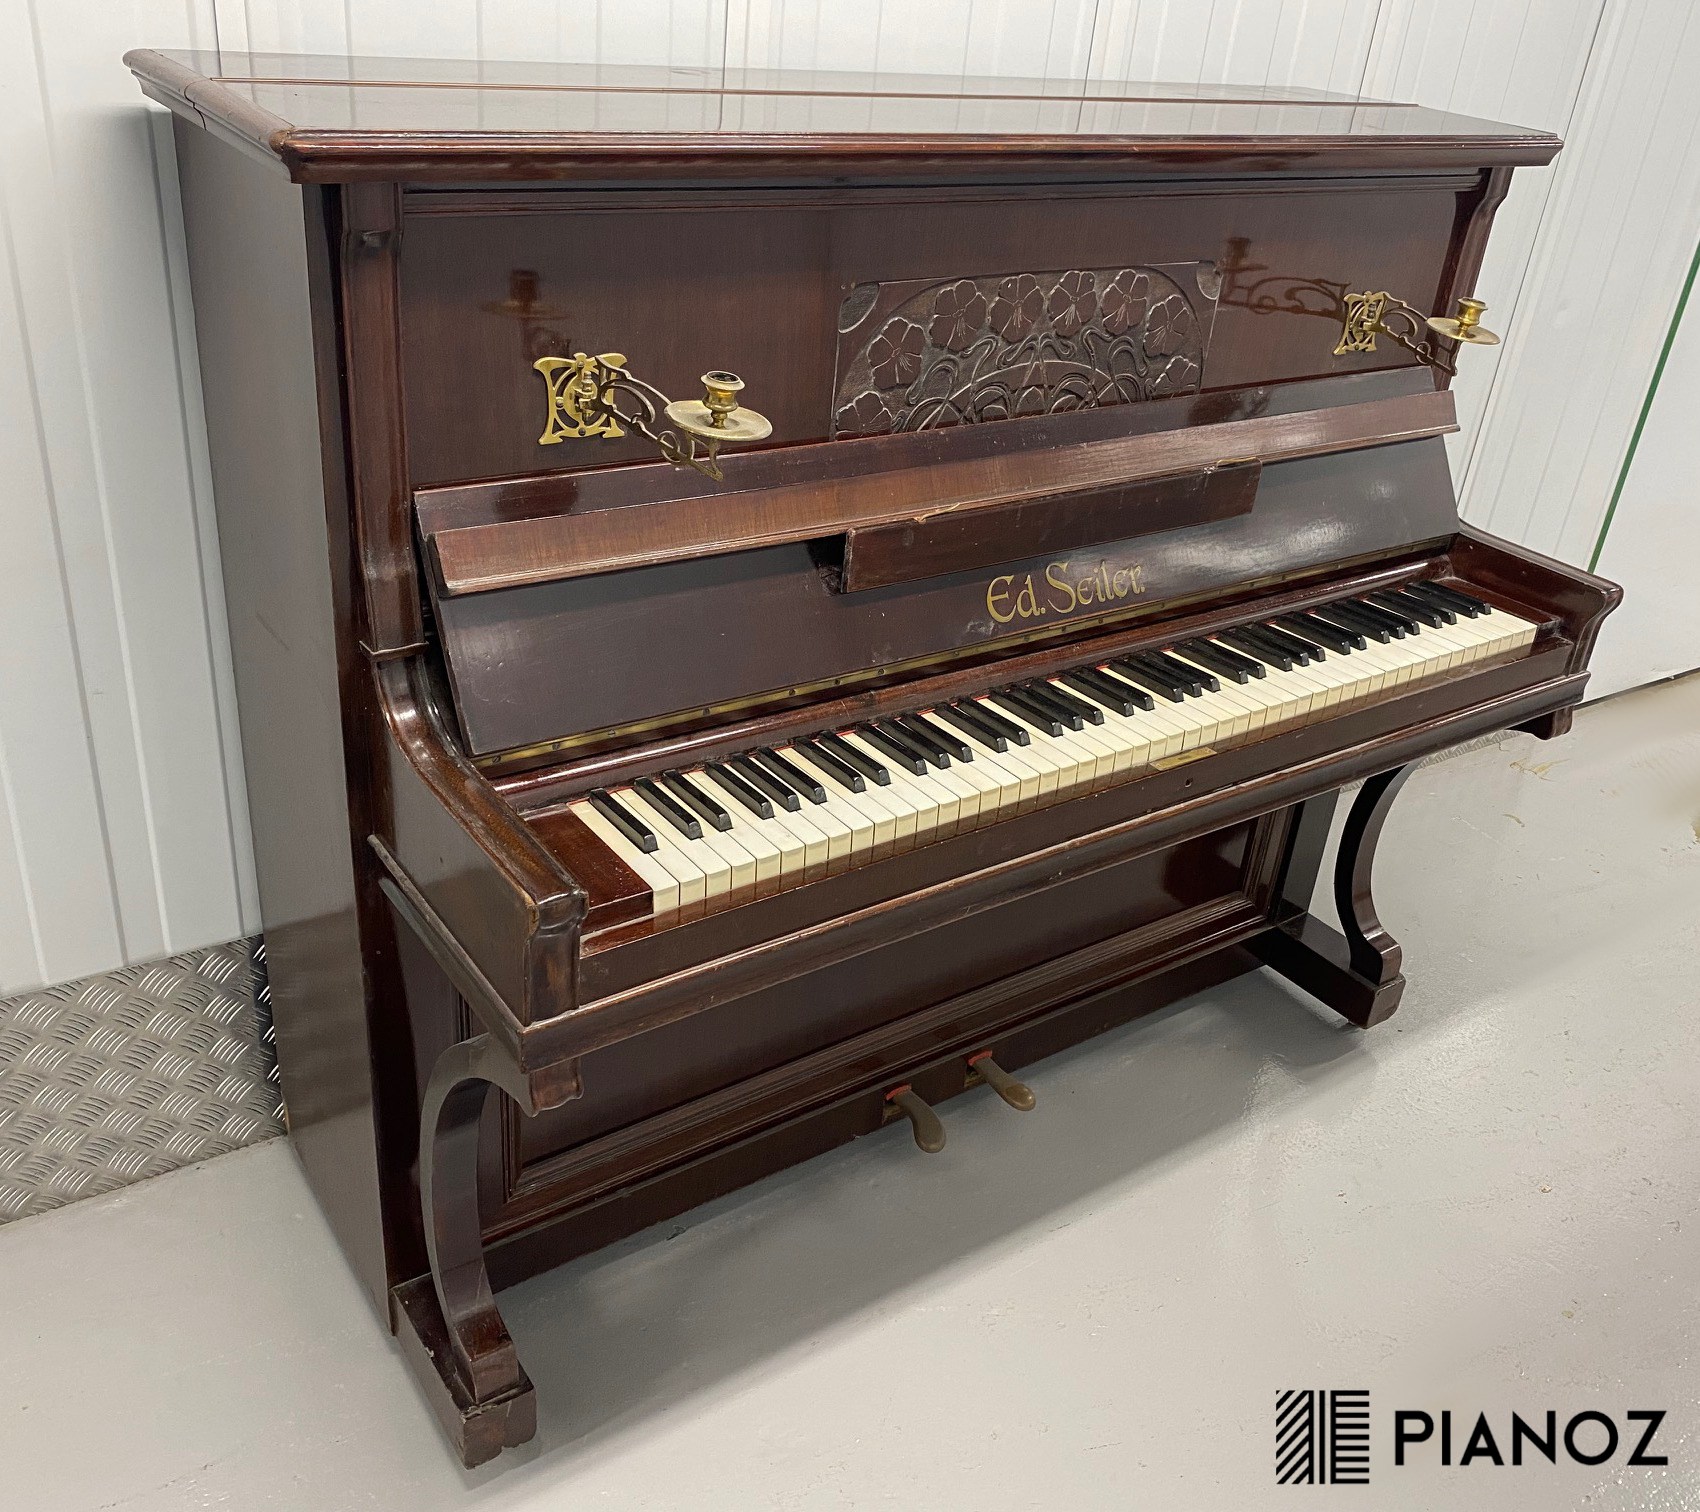 Seiler Art Nouveau Upright Piano piano for sale in UK